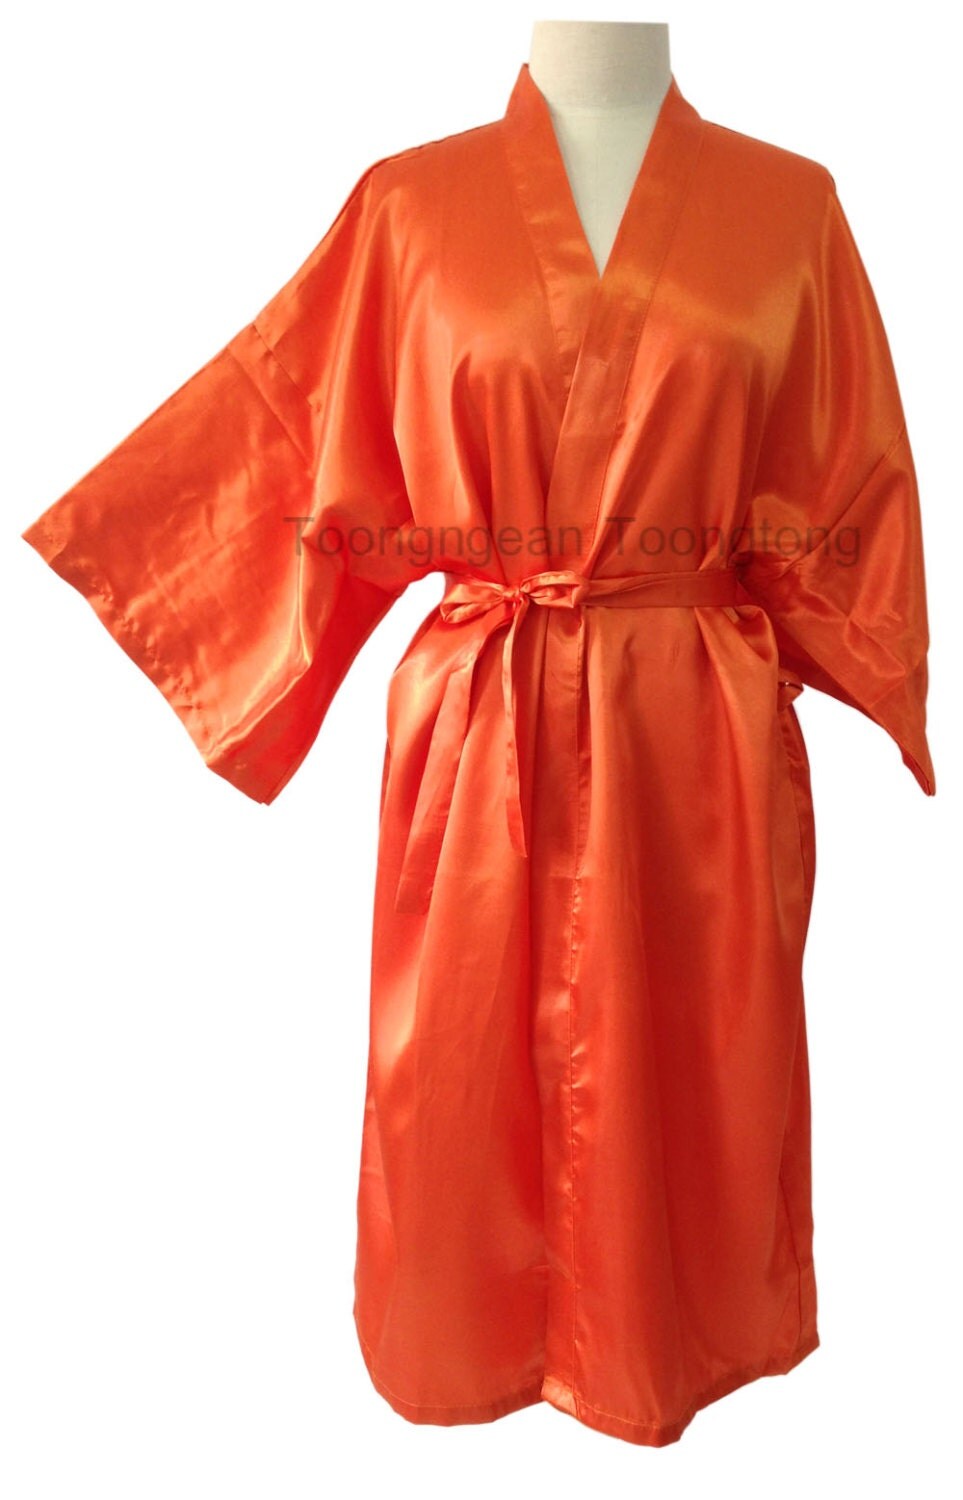 On Sale Kimono Robes Bridesmaids Silk Satin by ToongngeanToongtong